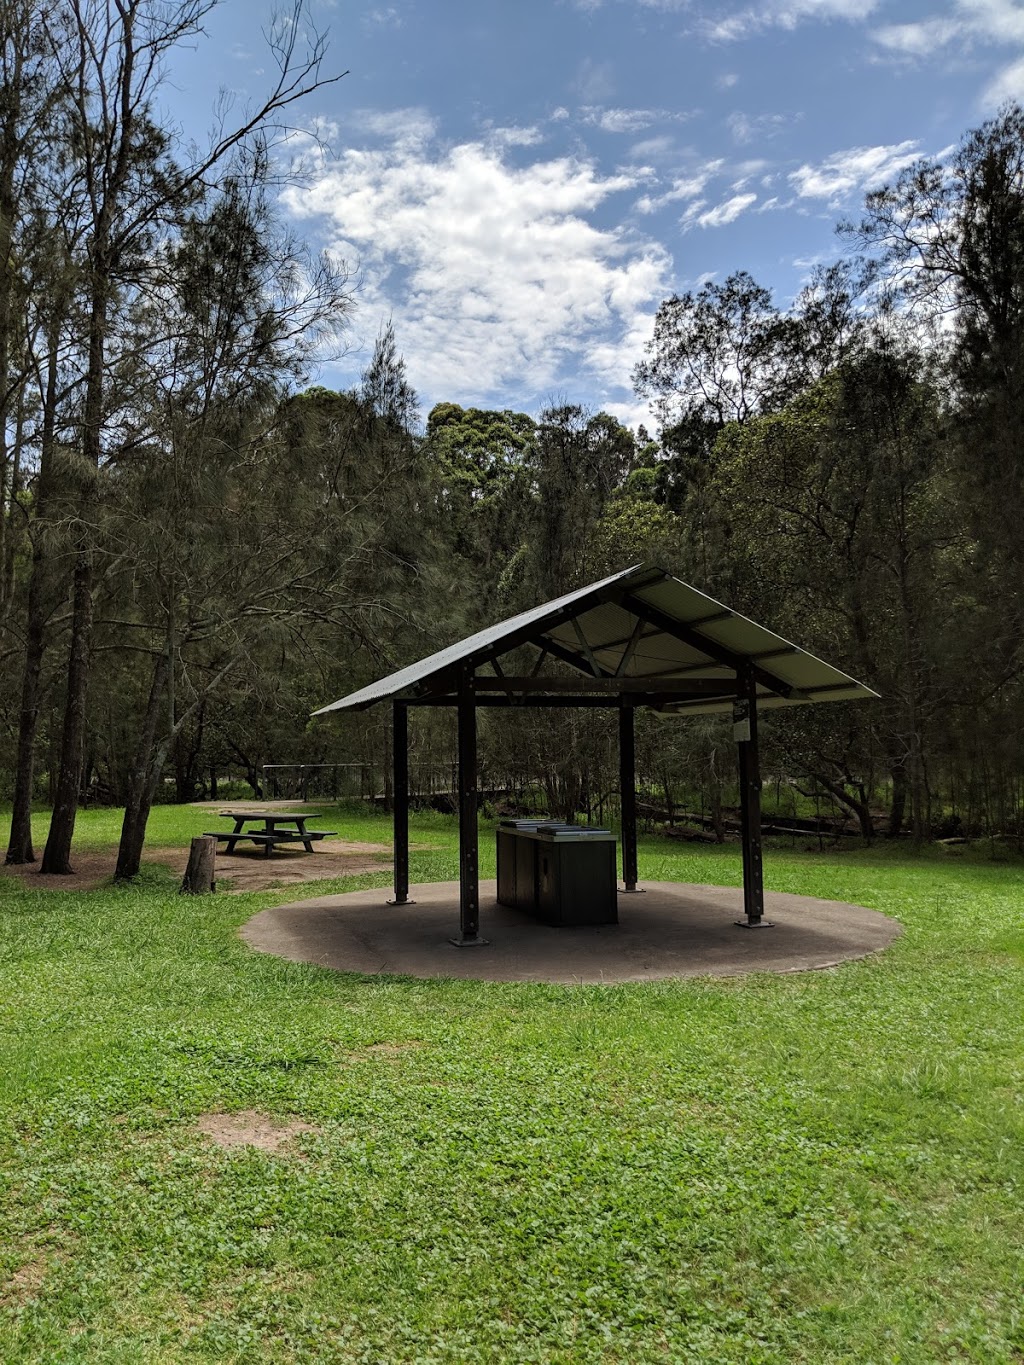 Lane Cove National Park | park | Naamaroo Trail, Lindfield NSW 2070, Australia